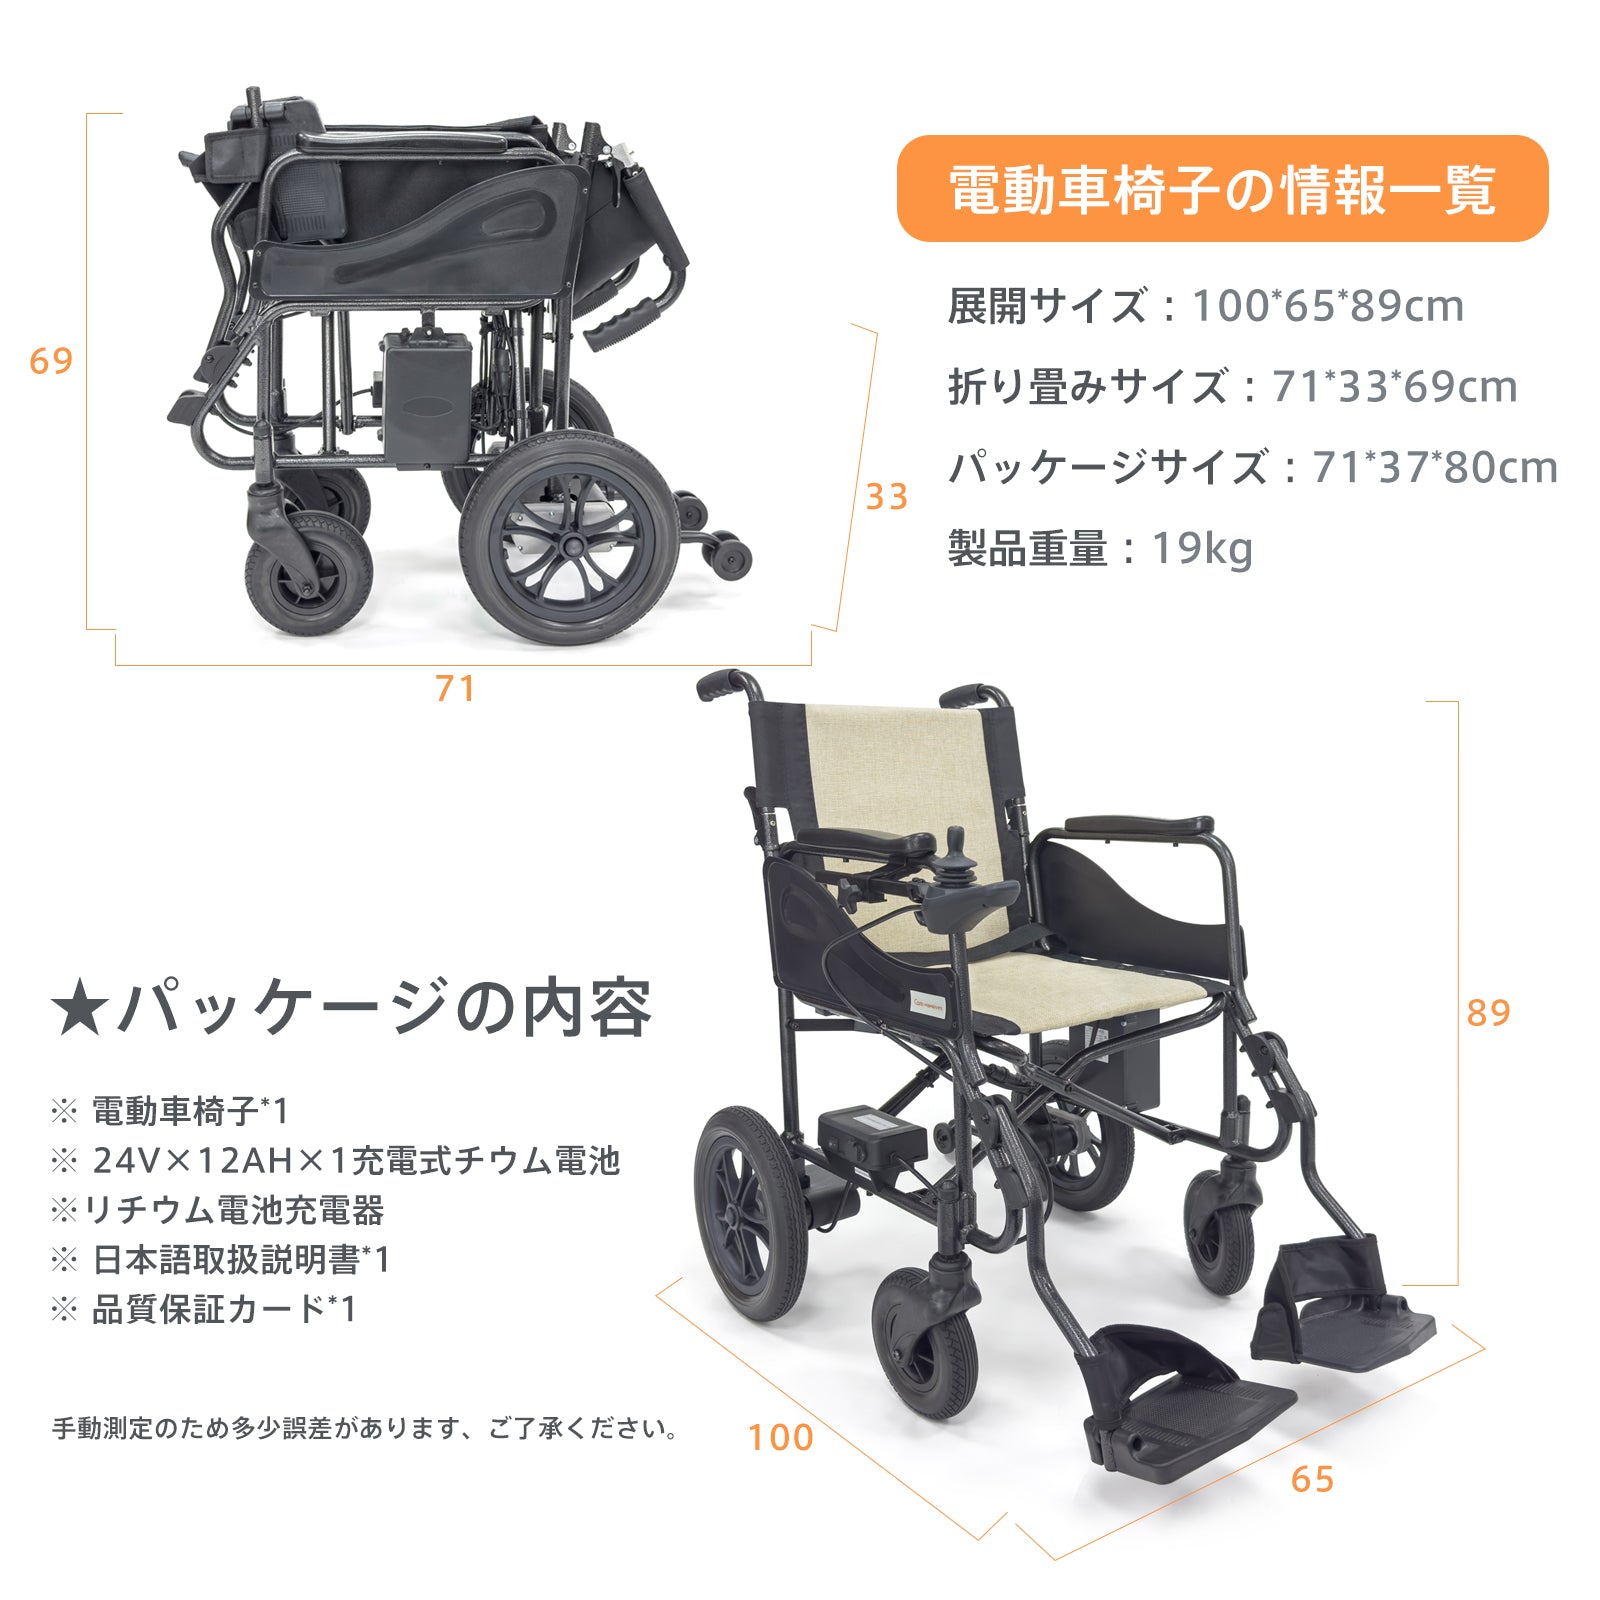 Care-Parents 電動車椅子 折りたたみ式 電磁ブレーキ リチウム電池*1 